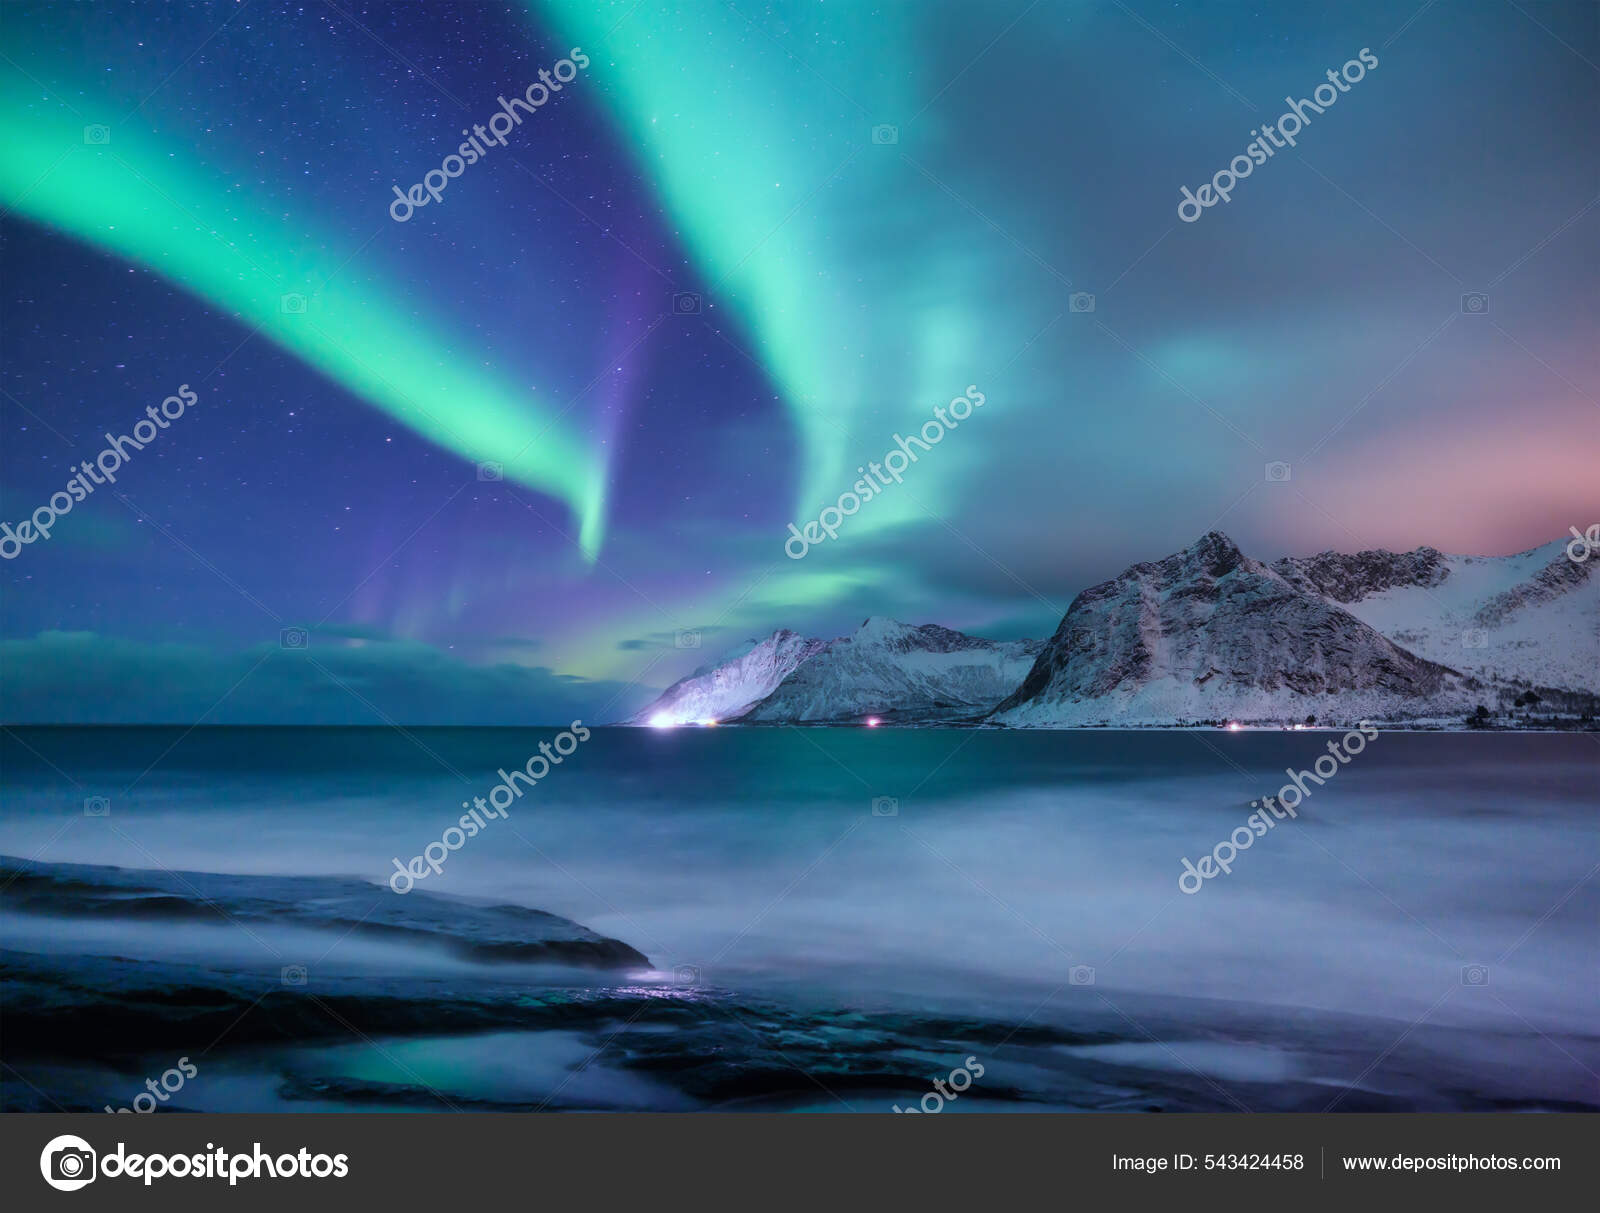 https://st.depositphotos.com/1993283/54342/i/1600/depositphotos_543424458-stock-photo-aurora-borealis-norway-green-northern.jpg